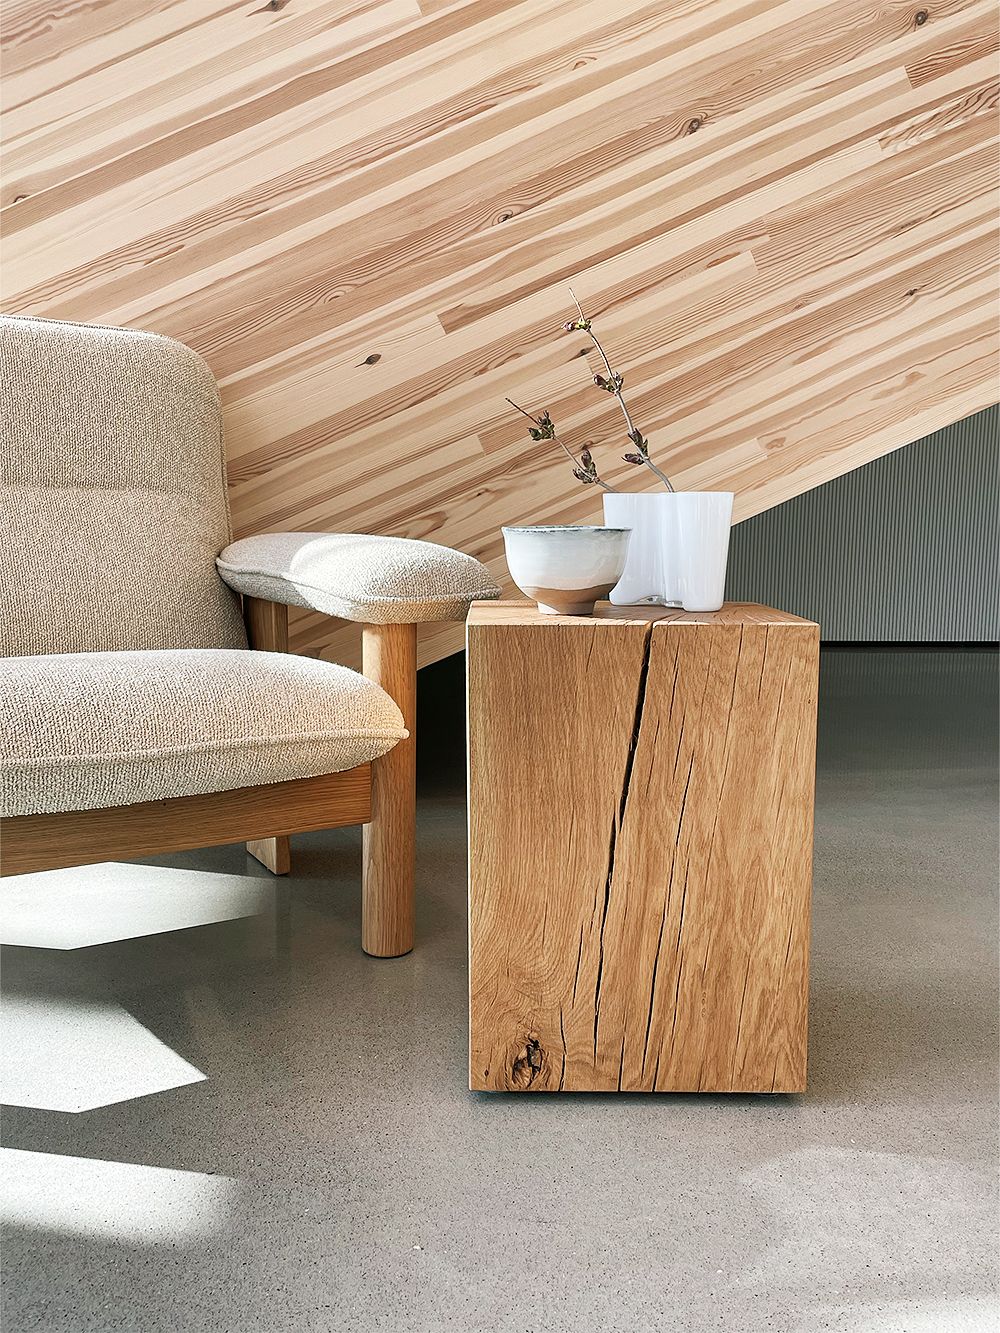 Nikari Biennale stool used as a side table next to Menu's Brasilia lounge chair